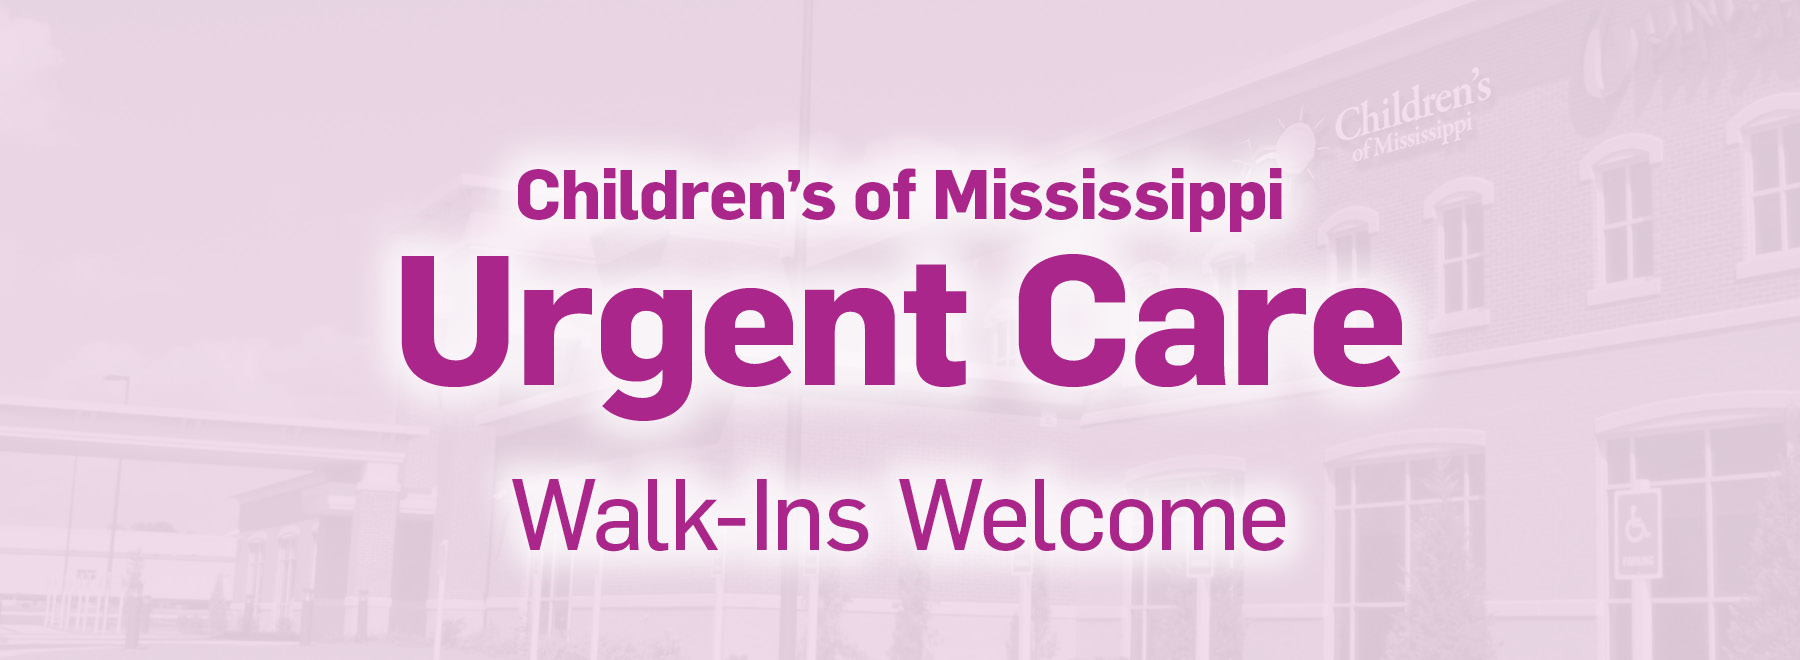 Children's of Mississippi Urgent Care Walk-Ins Welcome.